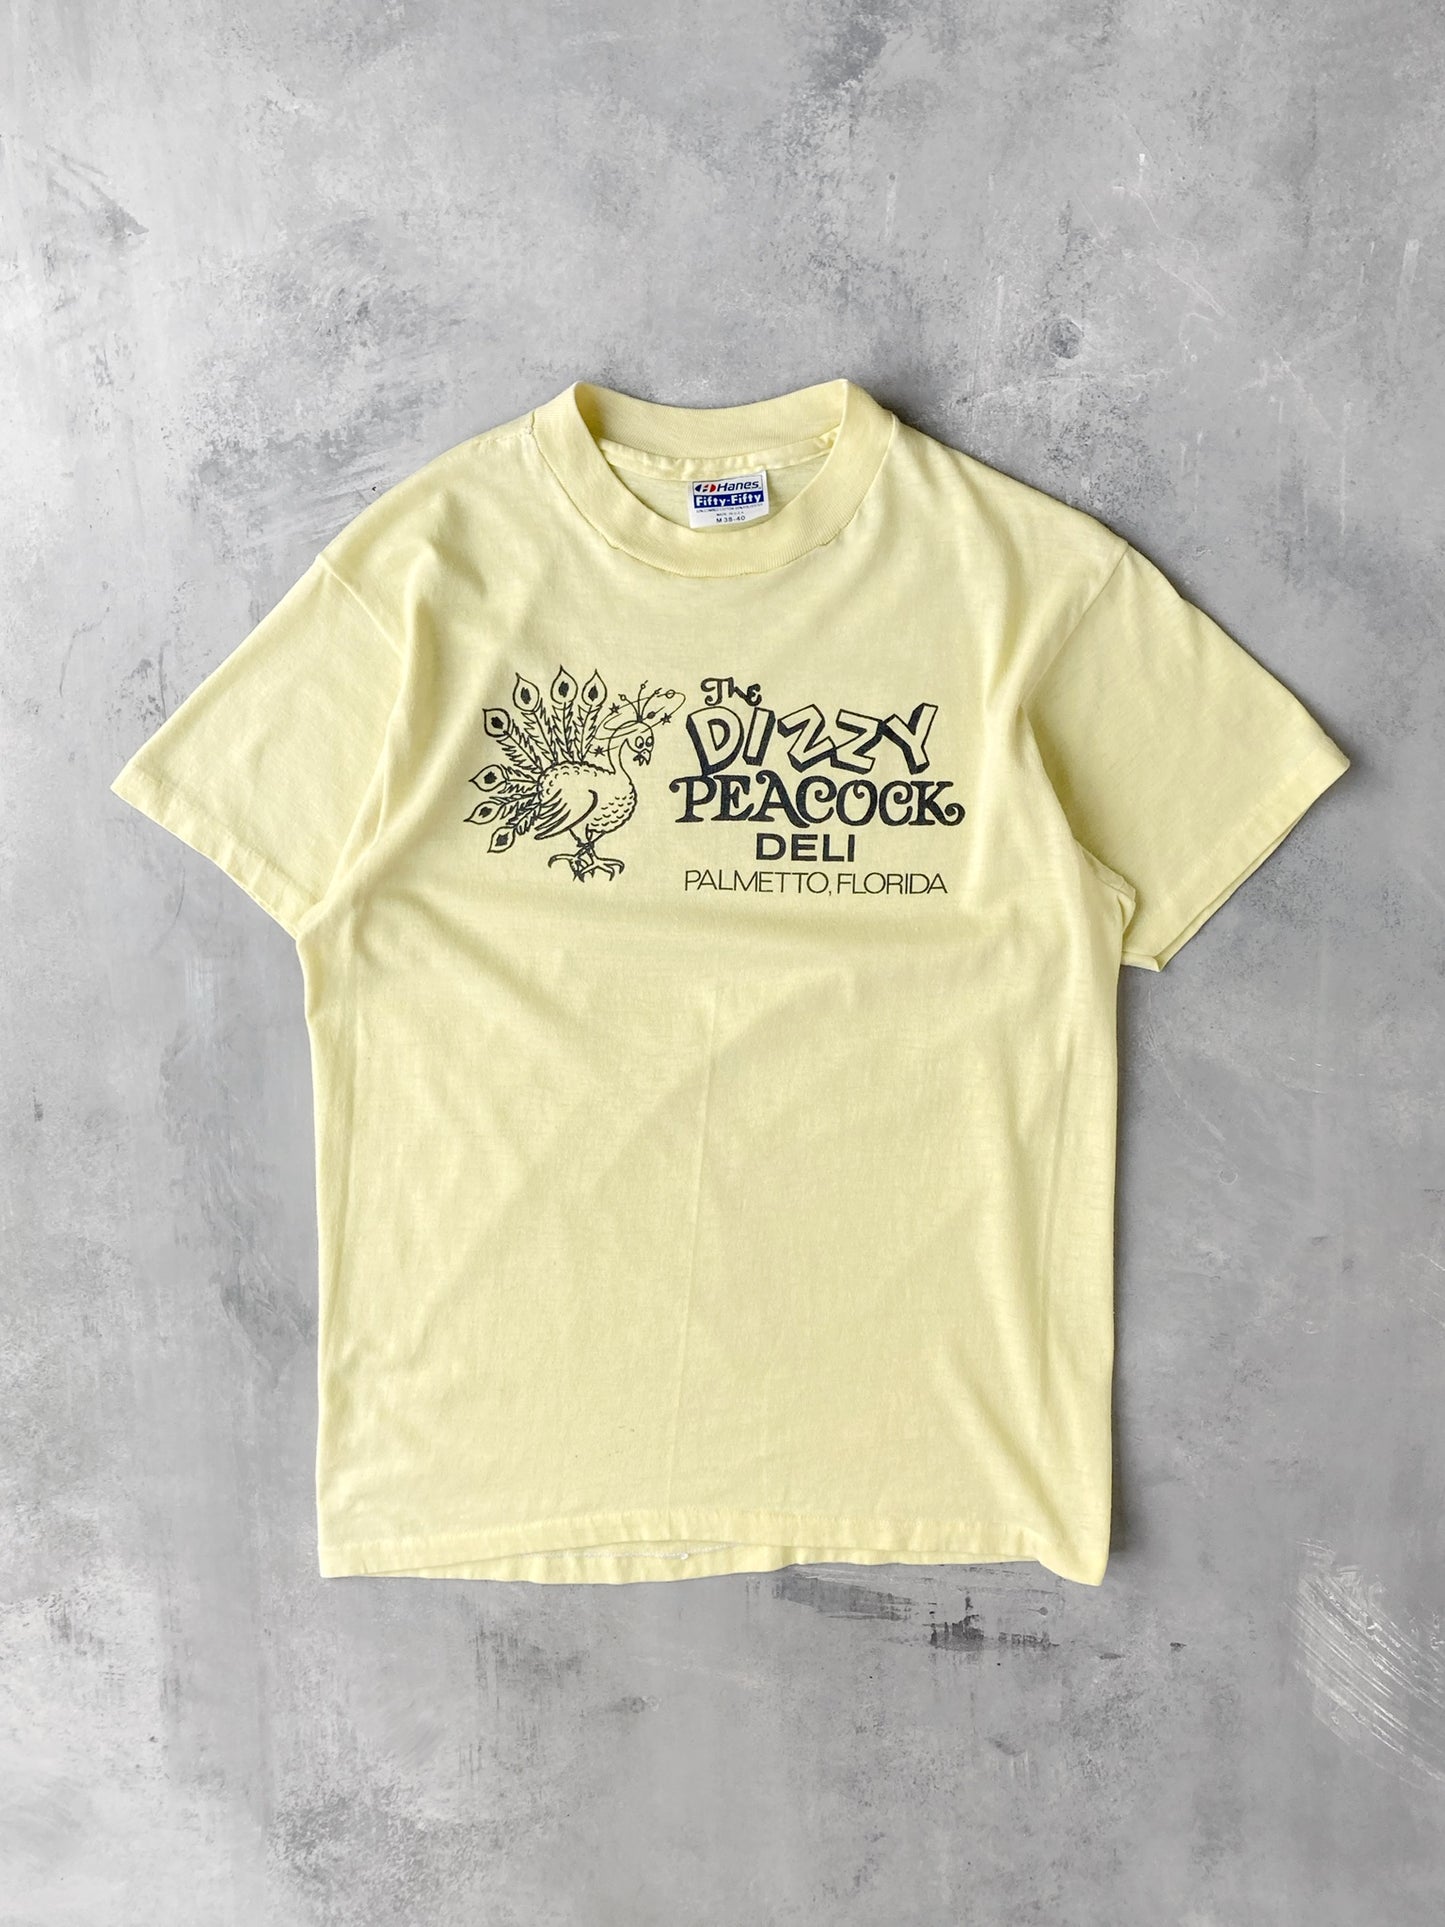 Florida Deli T-Shirt 80's - Small